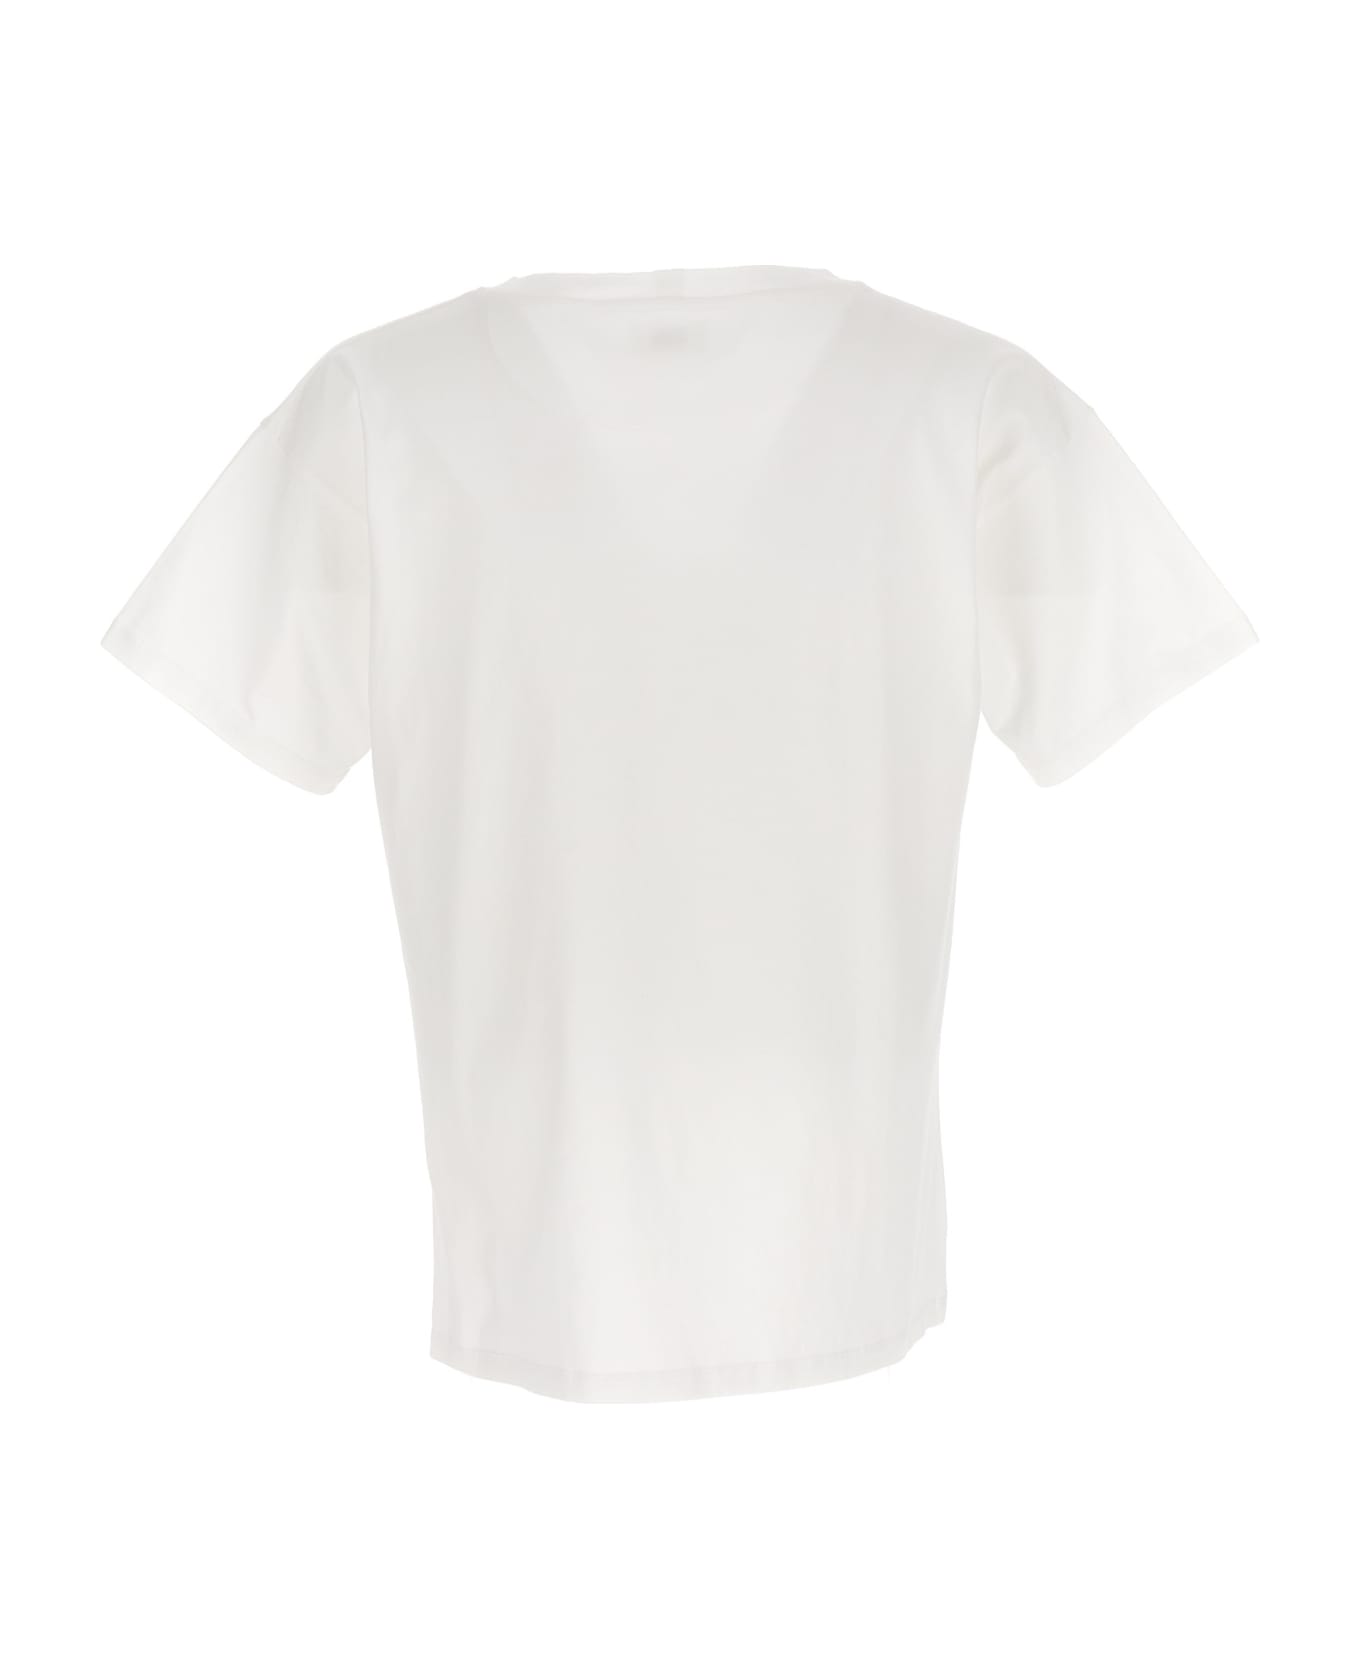 Bally Printed T-shirt - White